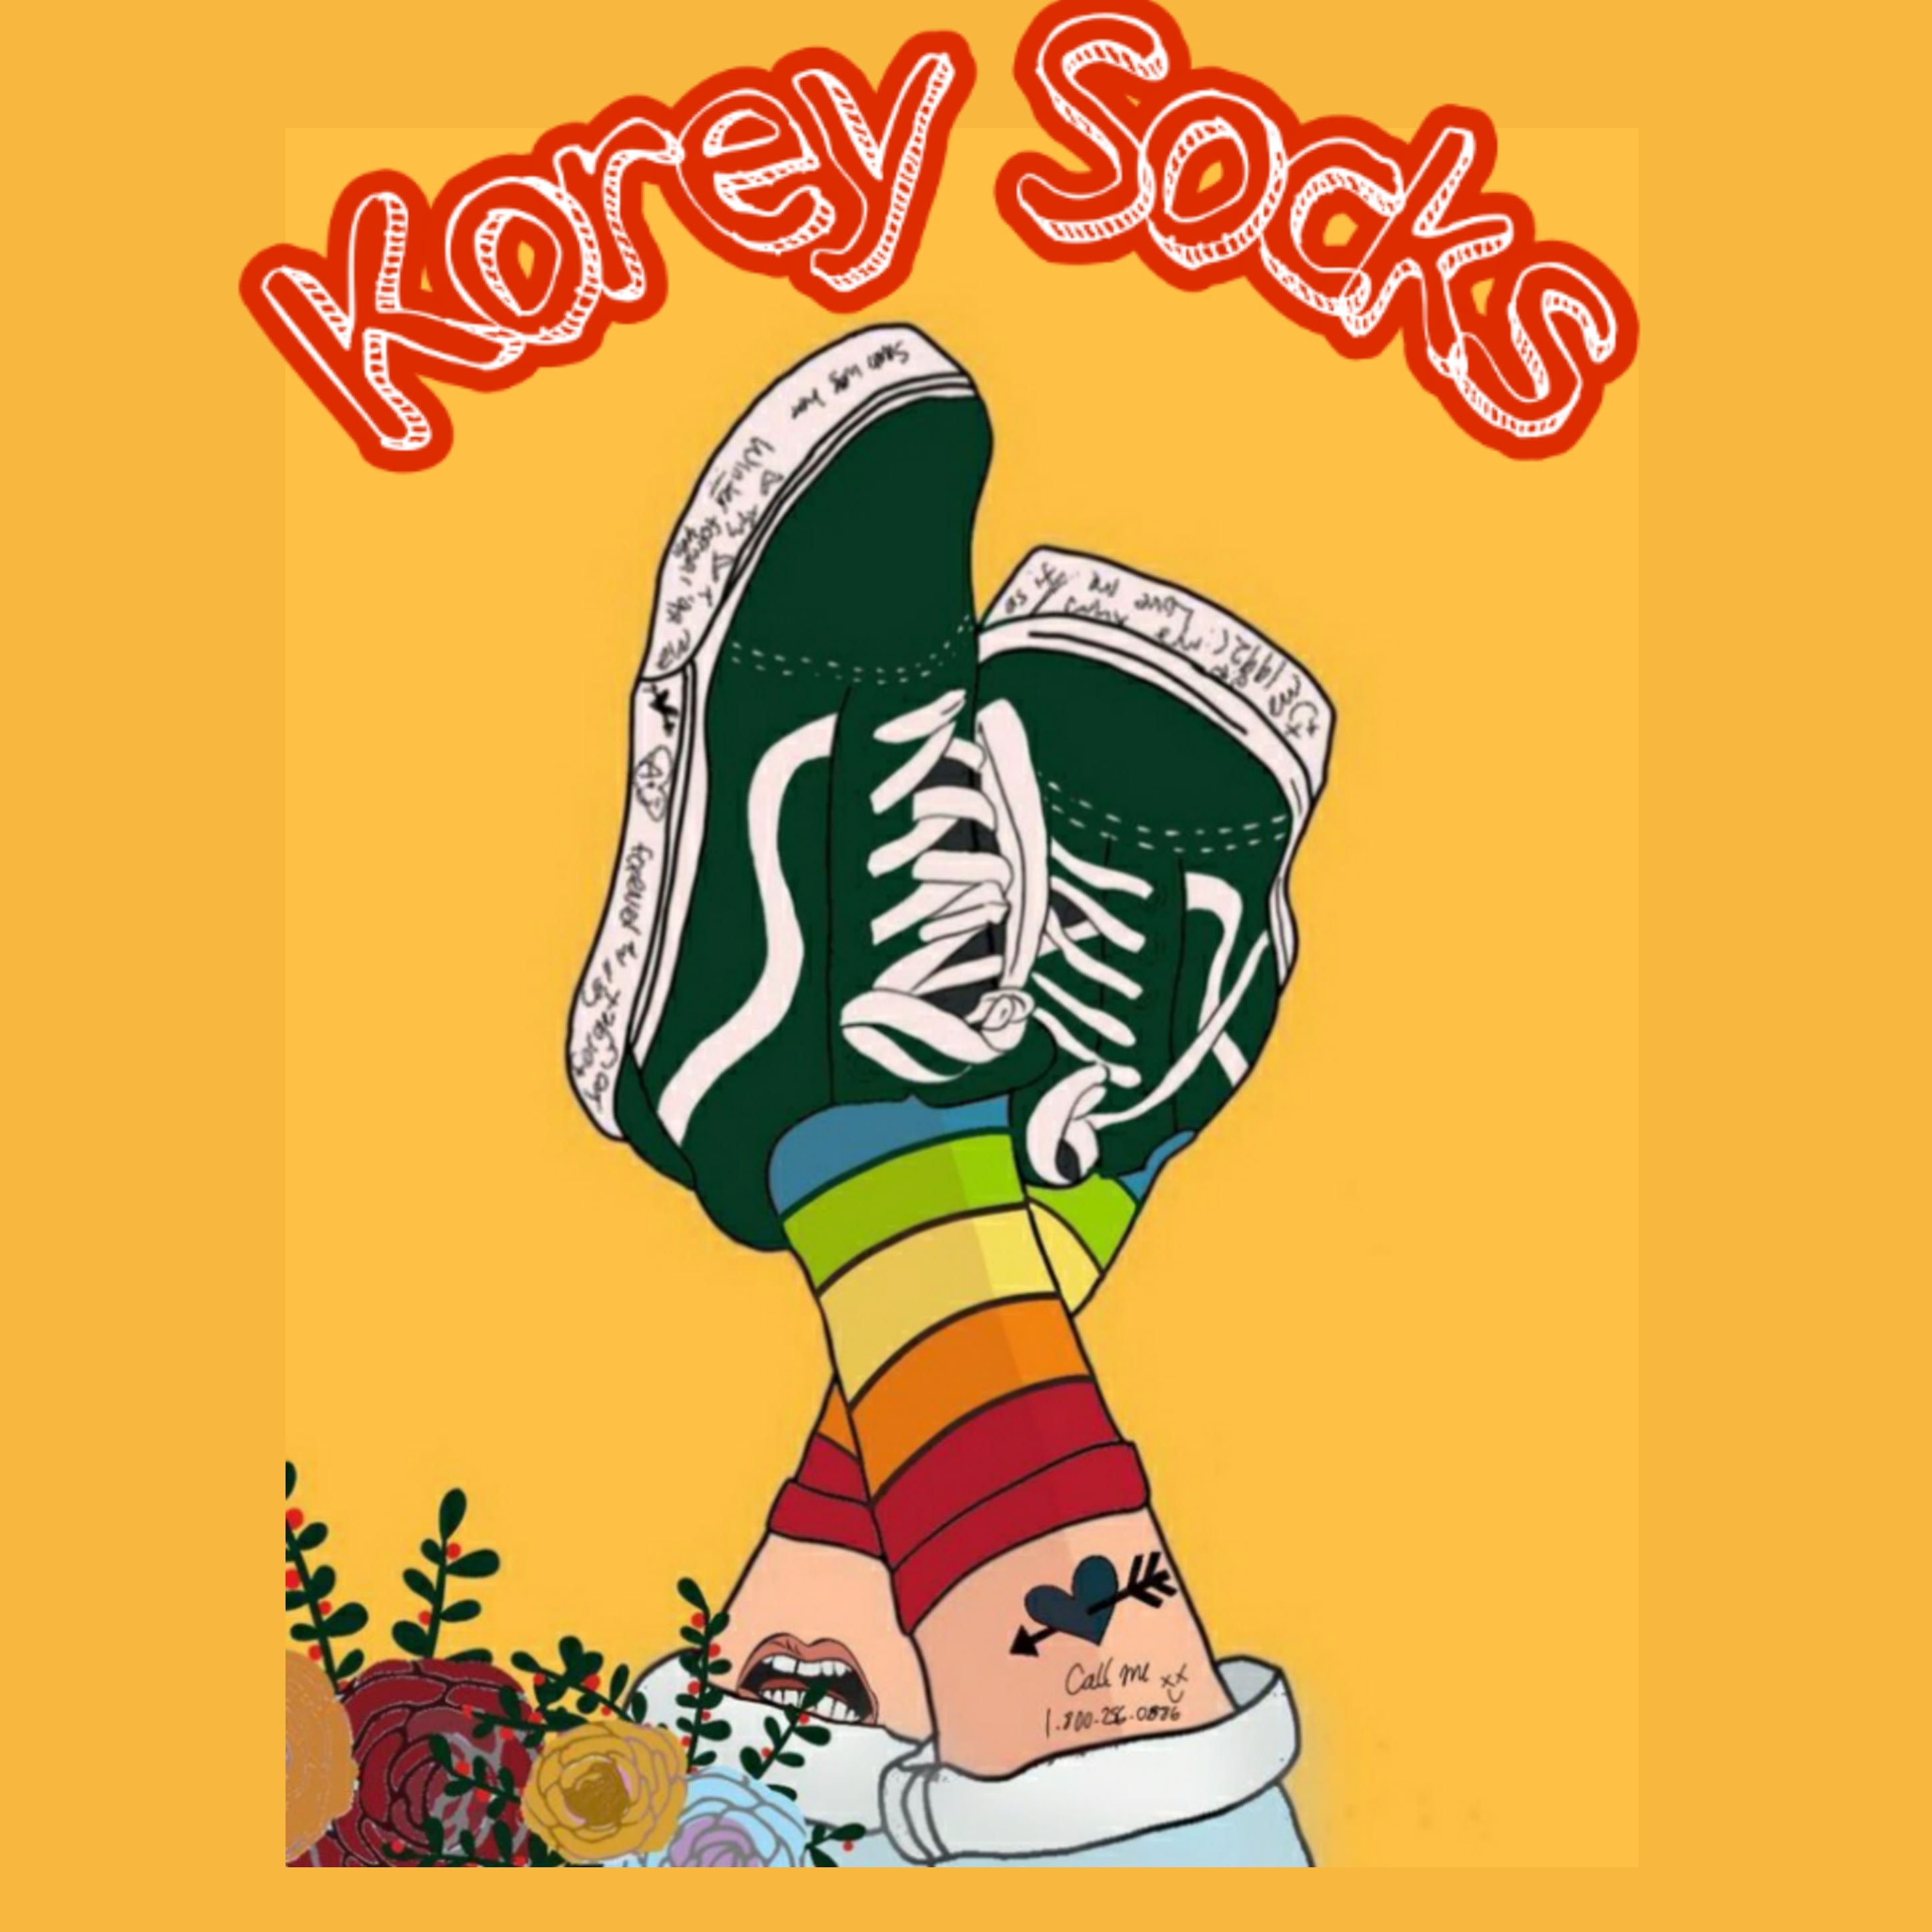 Korey Socks